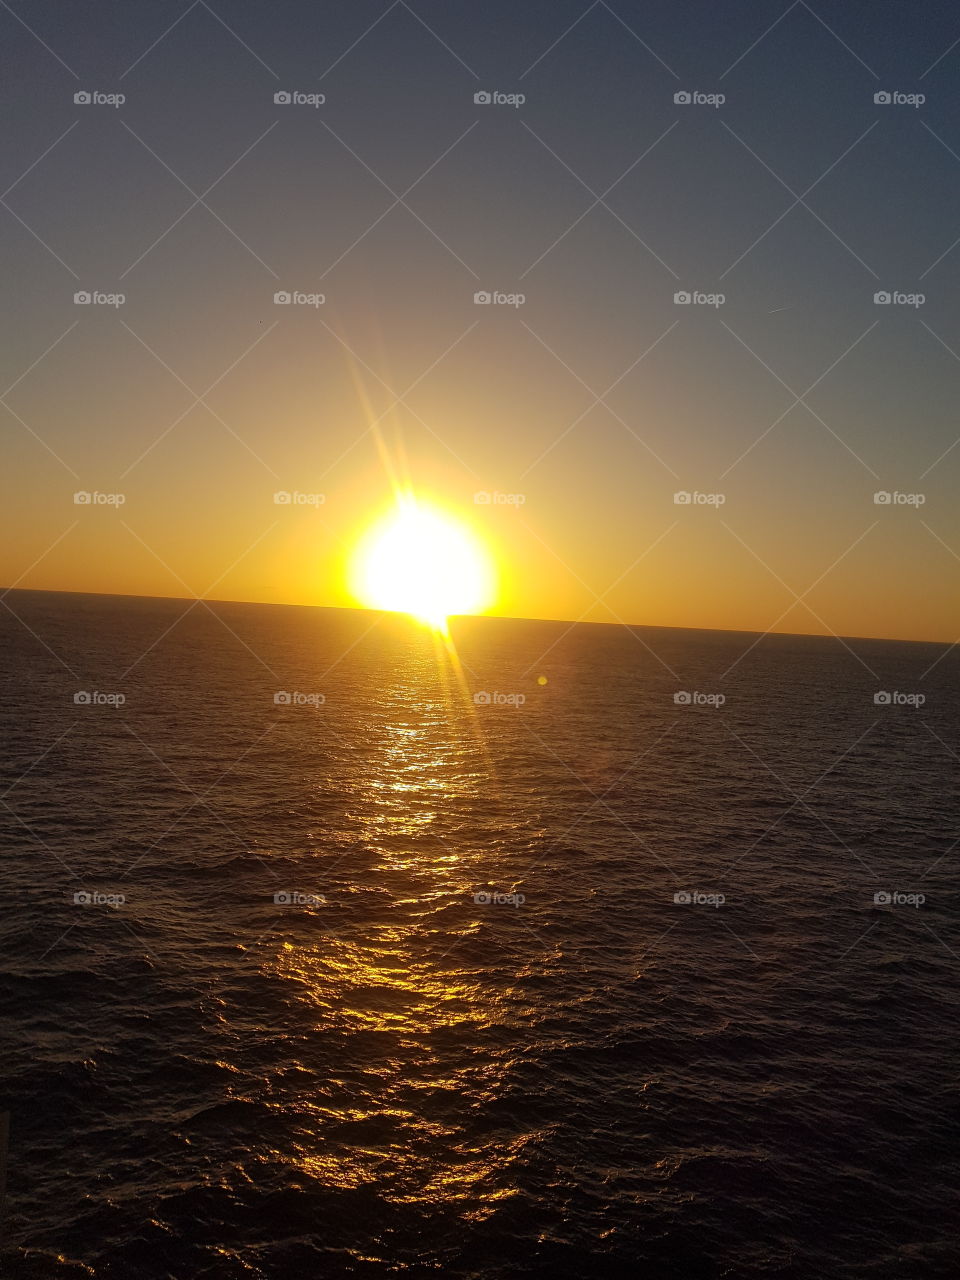 Sun in the cruise